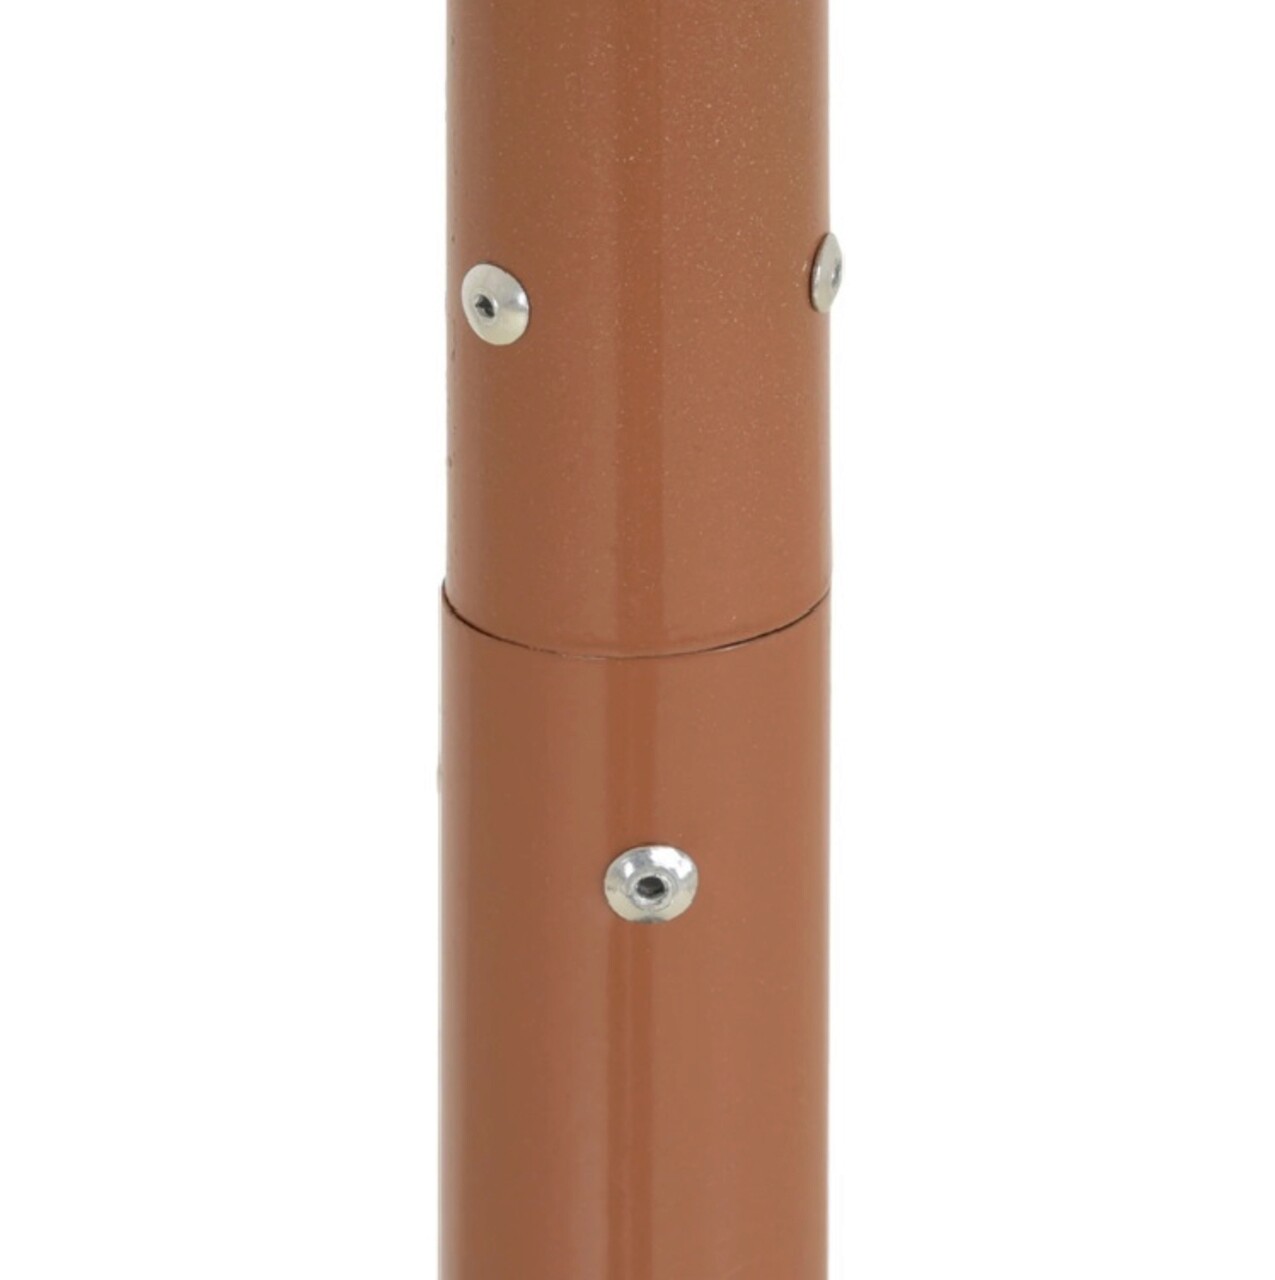 Umbrela pentru gradina/terasa Bioko, 180x232 cm, otel, natur/bej/alb